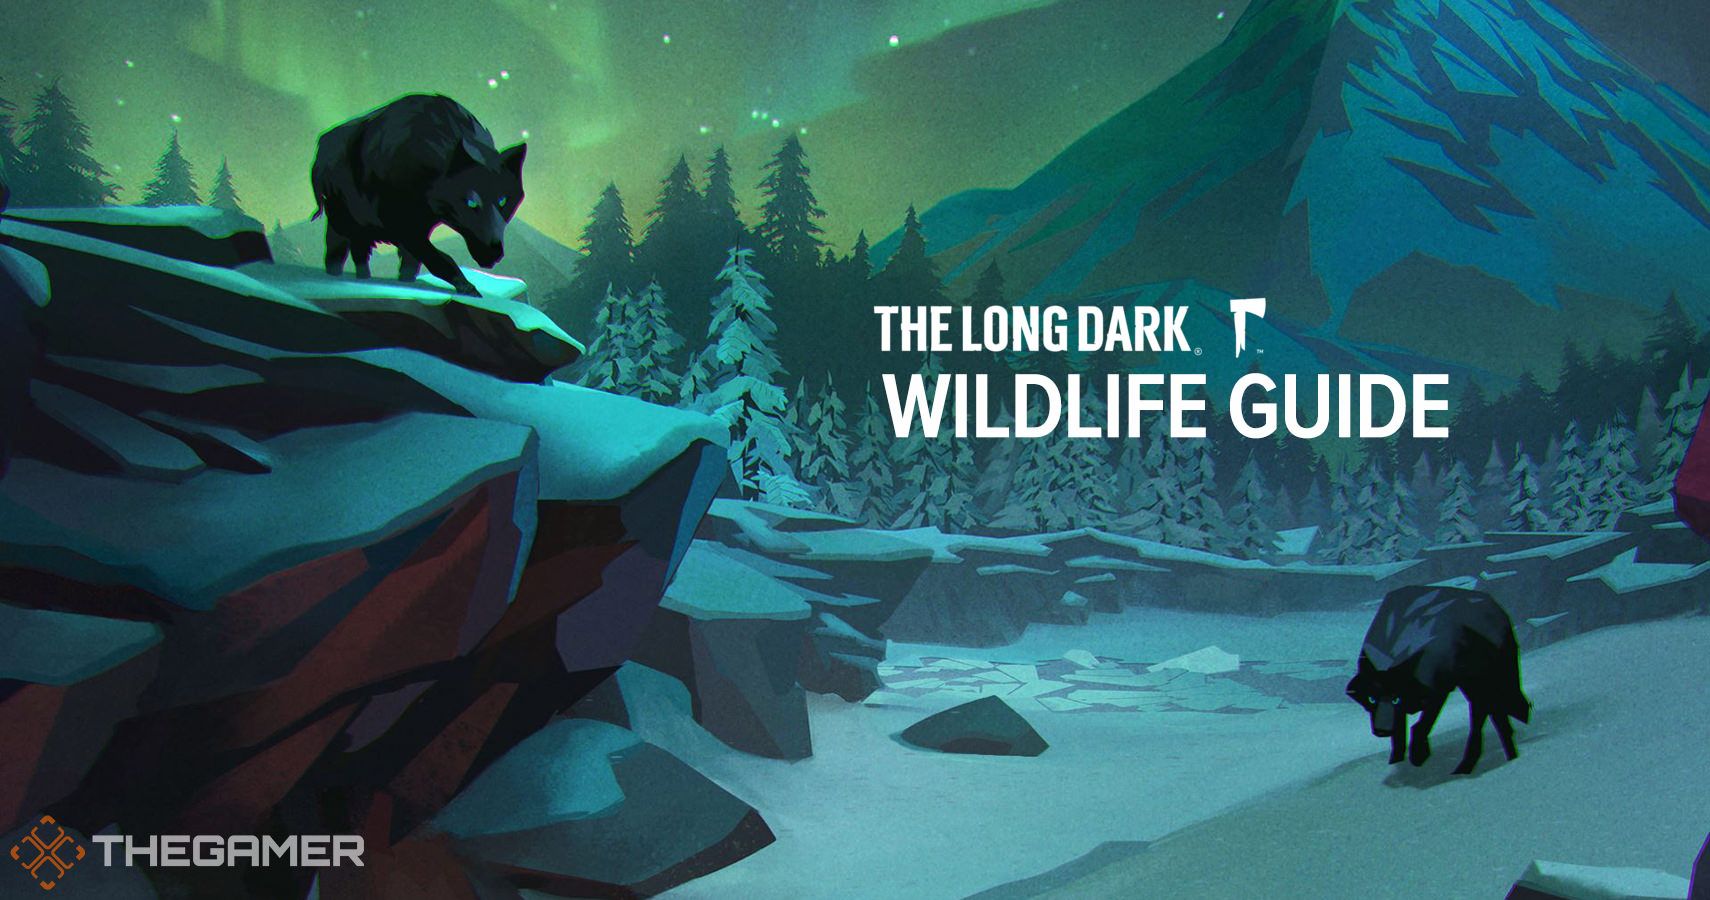 The Long Dark: Wildlife Guide